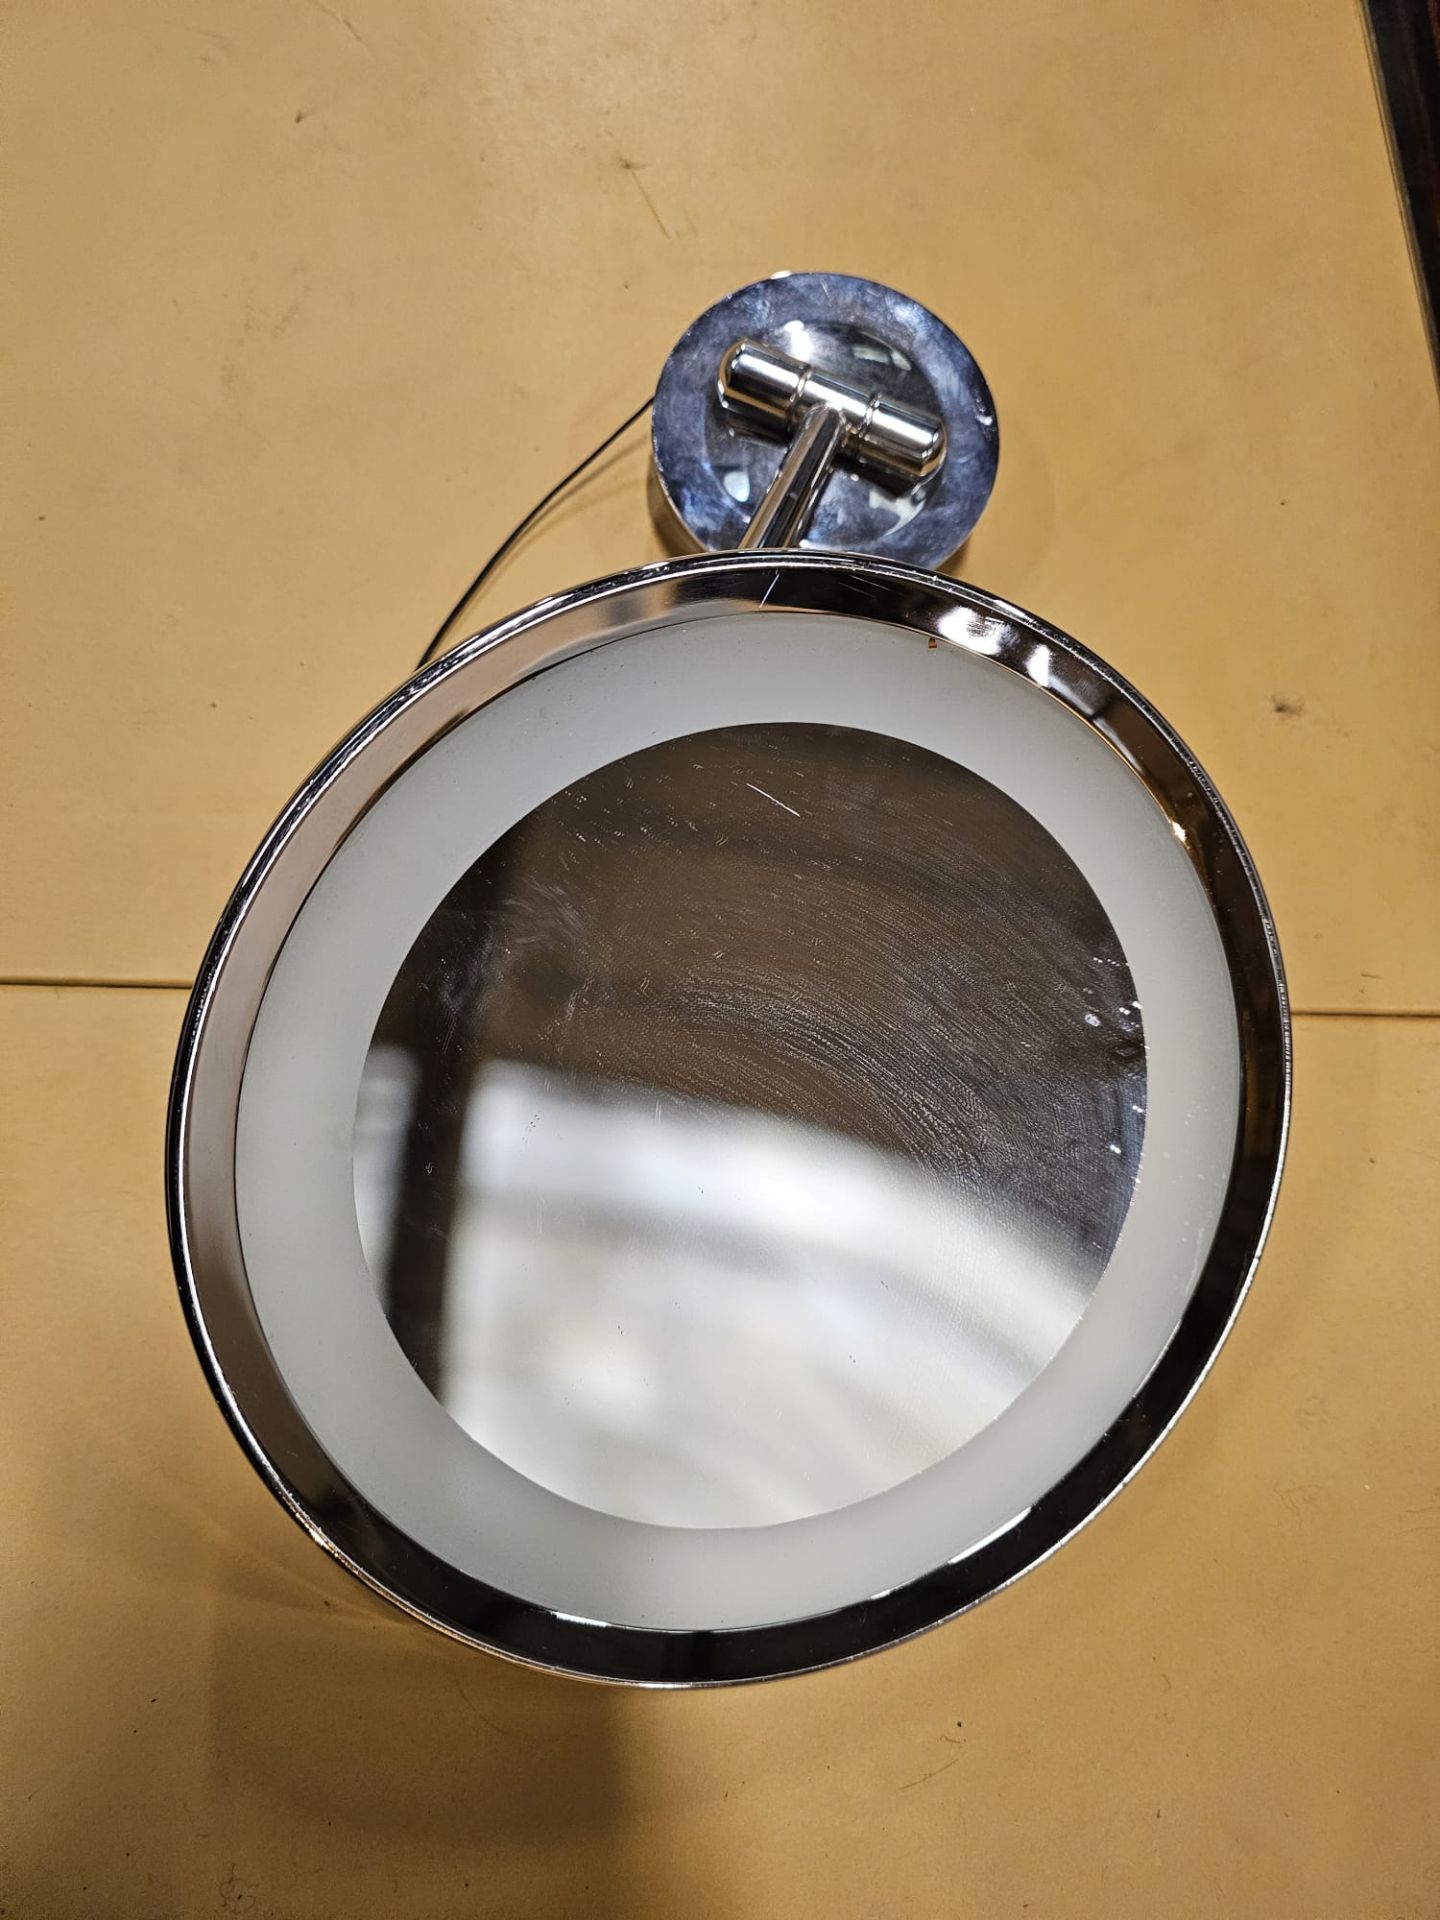 LED Illuminated Magnifying Vanity Mirror For Bathroom Round Ingress Protection Rating IP48